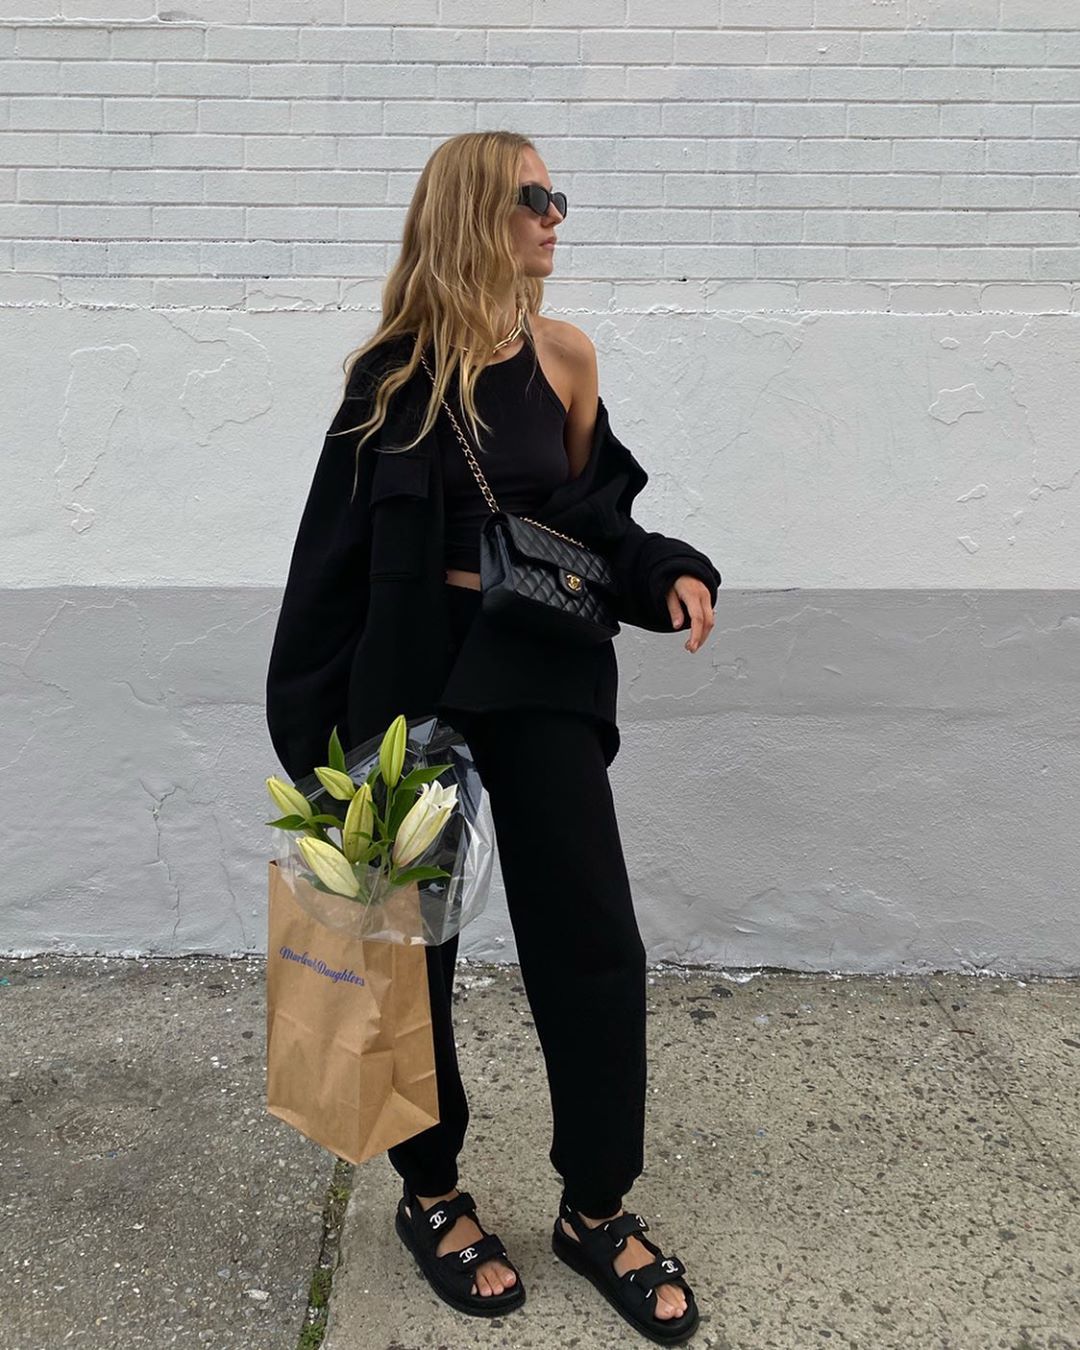 Marie von Behrens @mvb Instagram all-black outfit idea: sweatshirt, tank top, Chanel bag, sweatpants, and Chanel dad sandals